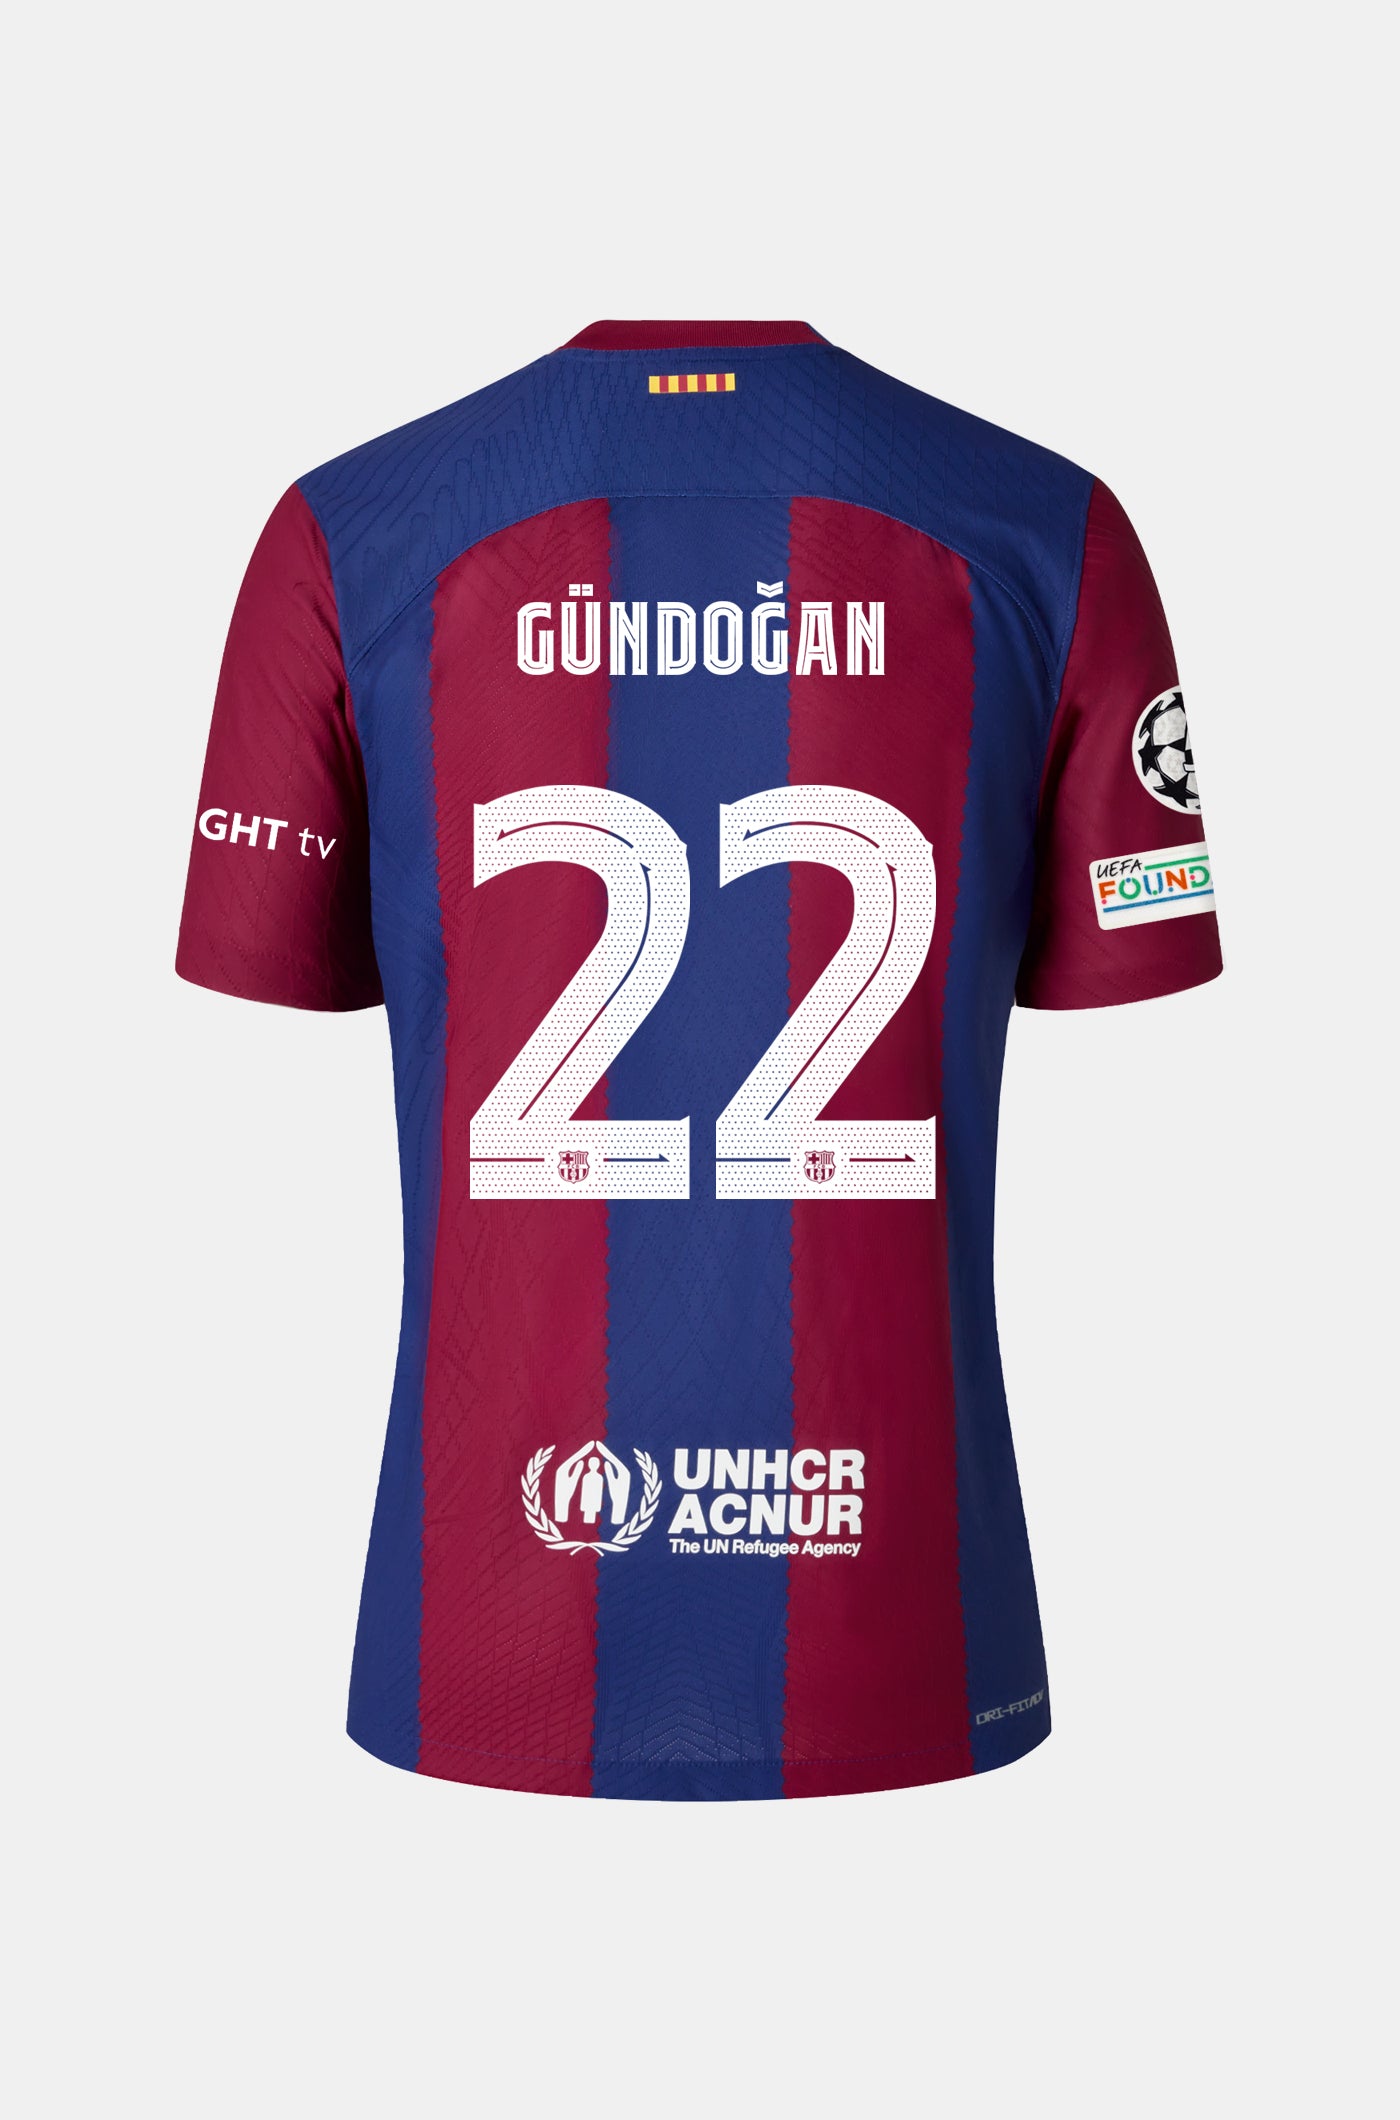 22. Gündoğan – Barça Official Store Spotify Camp Nou